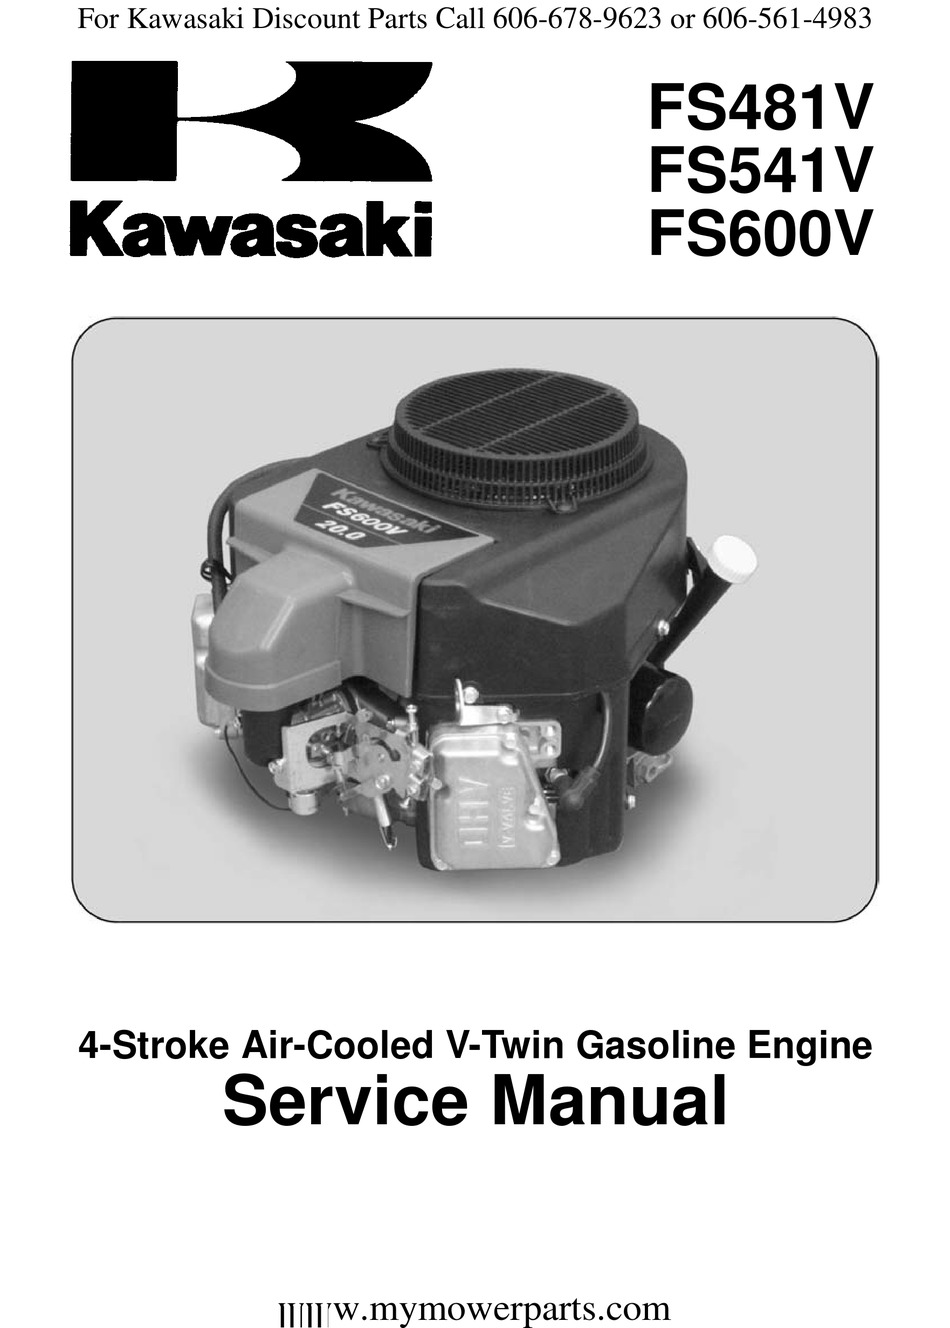 KAWASAKI FS481V SERVICE Pdf Download | ManualsLib